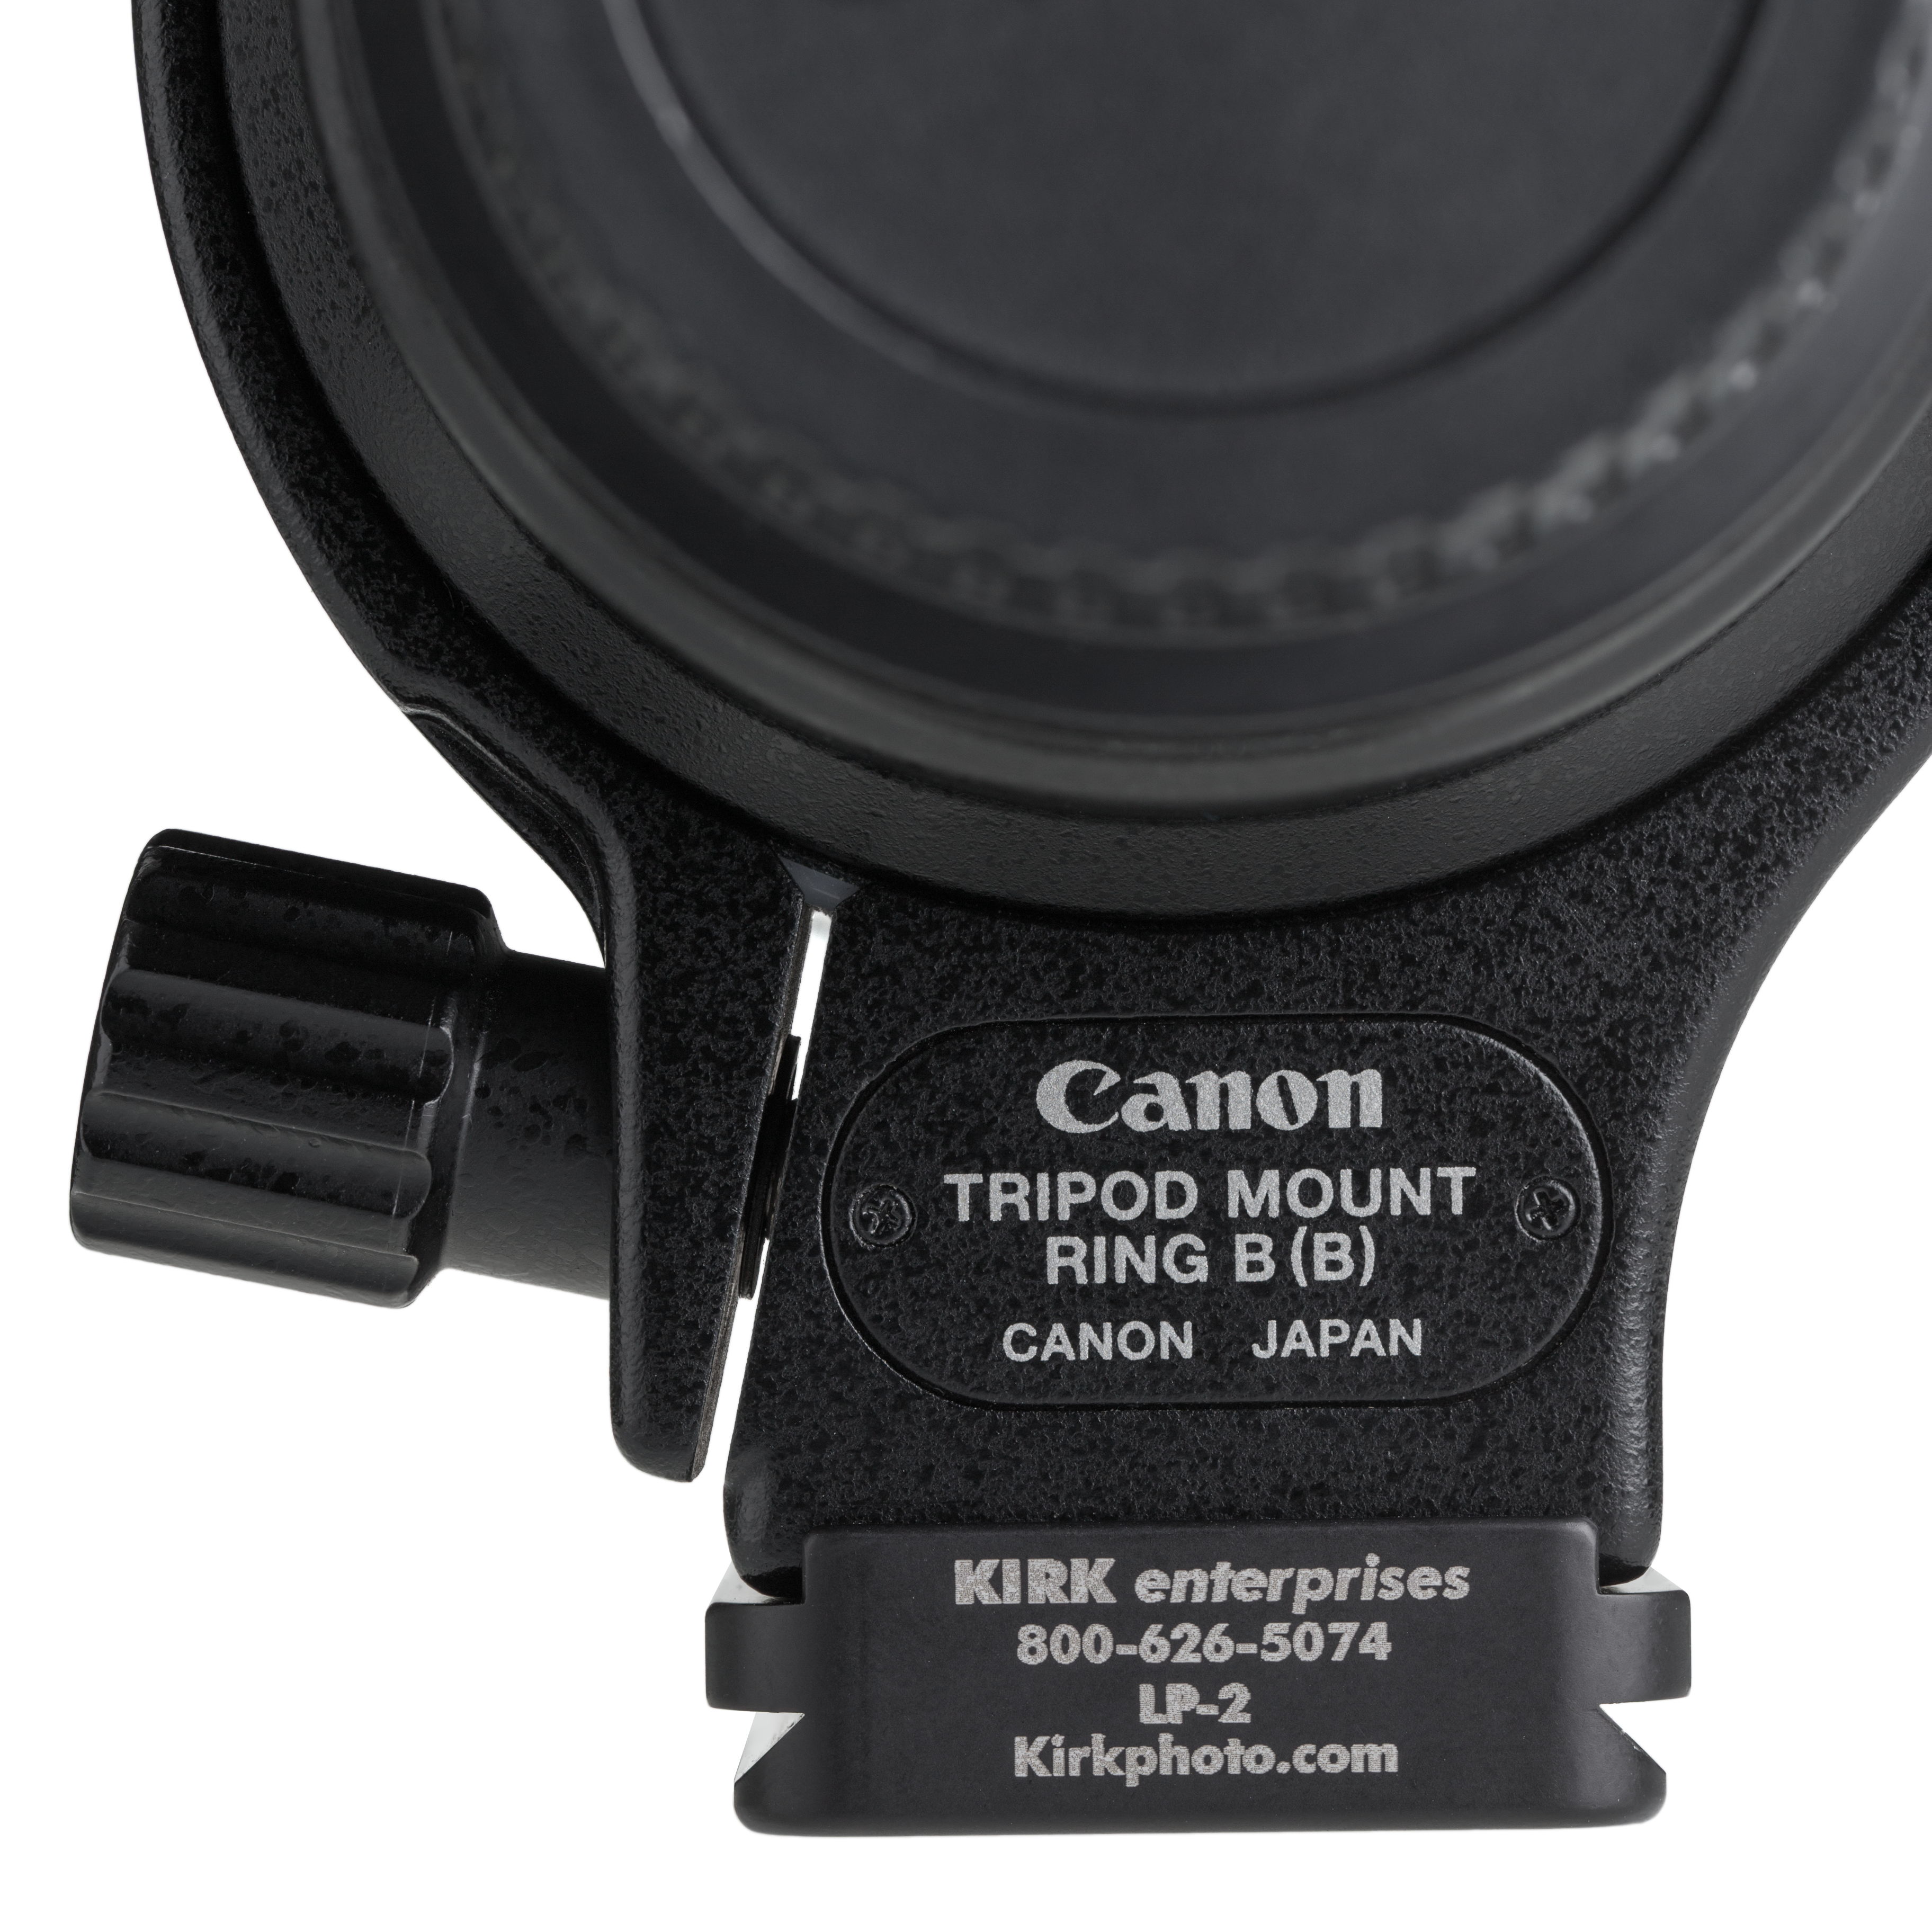 Kirk LP-2 on Canon Tripod Mount Ring B (B) front